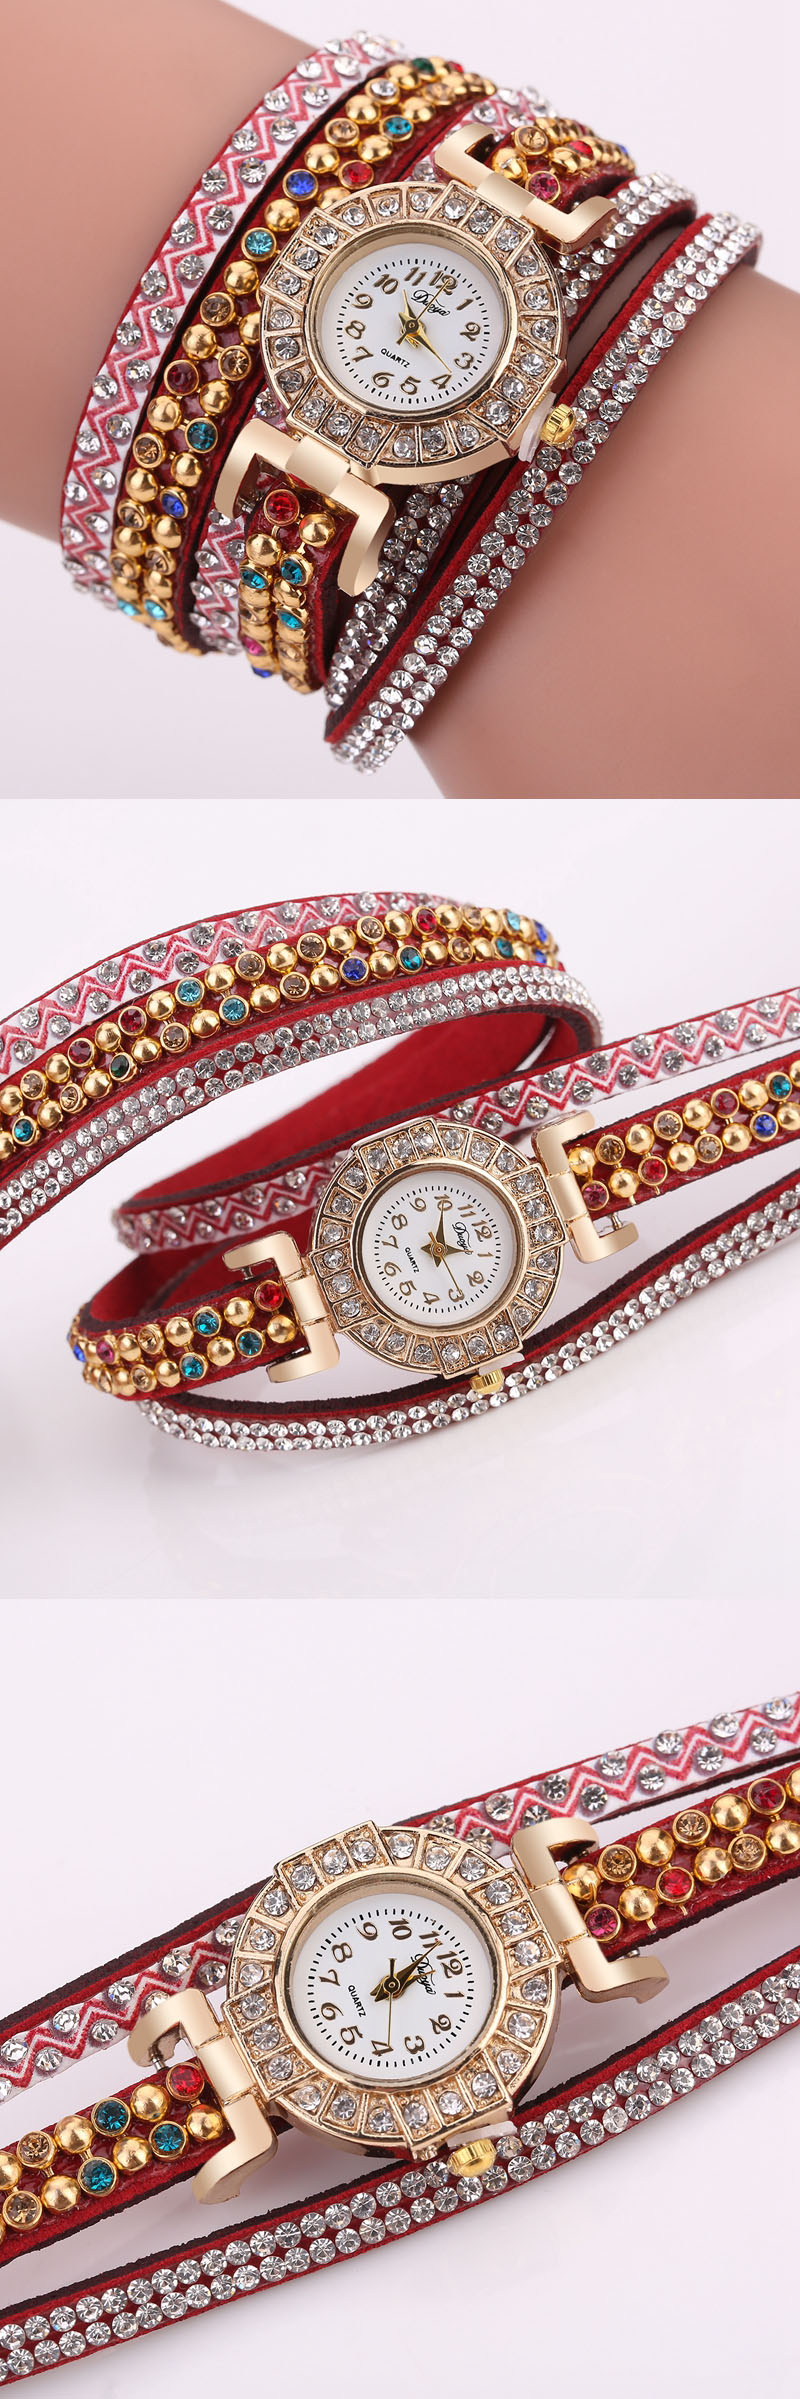 DUOYA-Fine-Leather-Band-Winding-Crystal-Ladies-Bracelet-Watch-Elegant-Women-Analog-Quartz-Watches-1216701